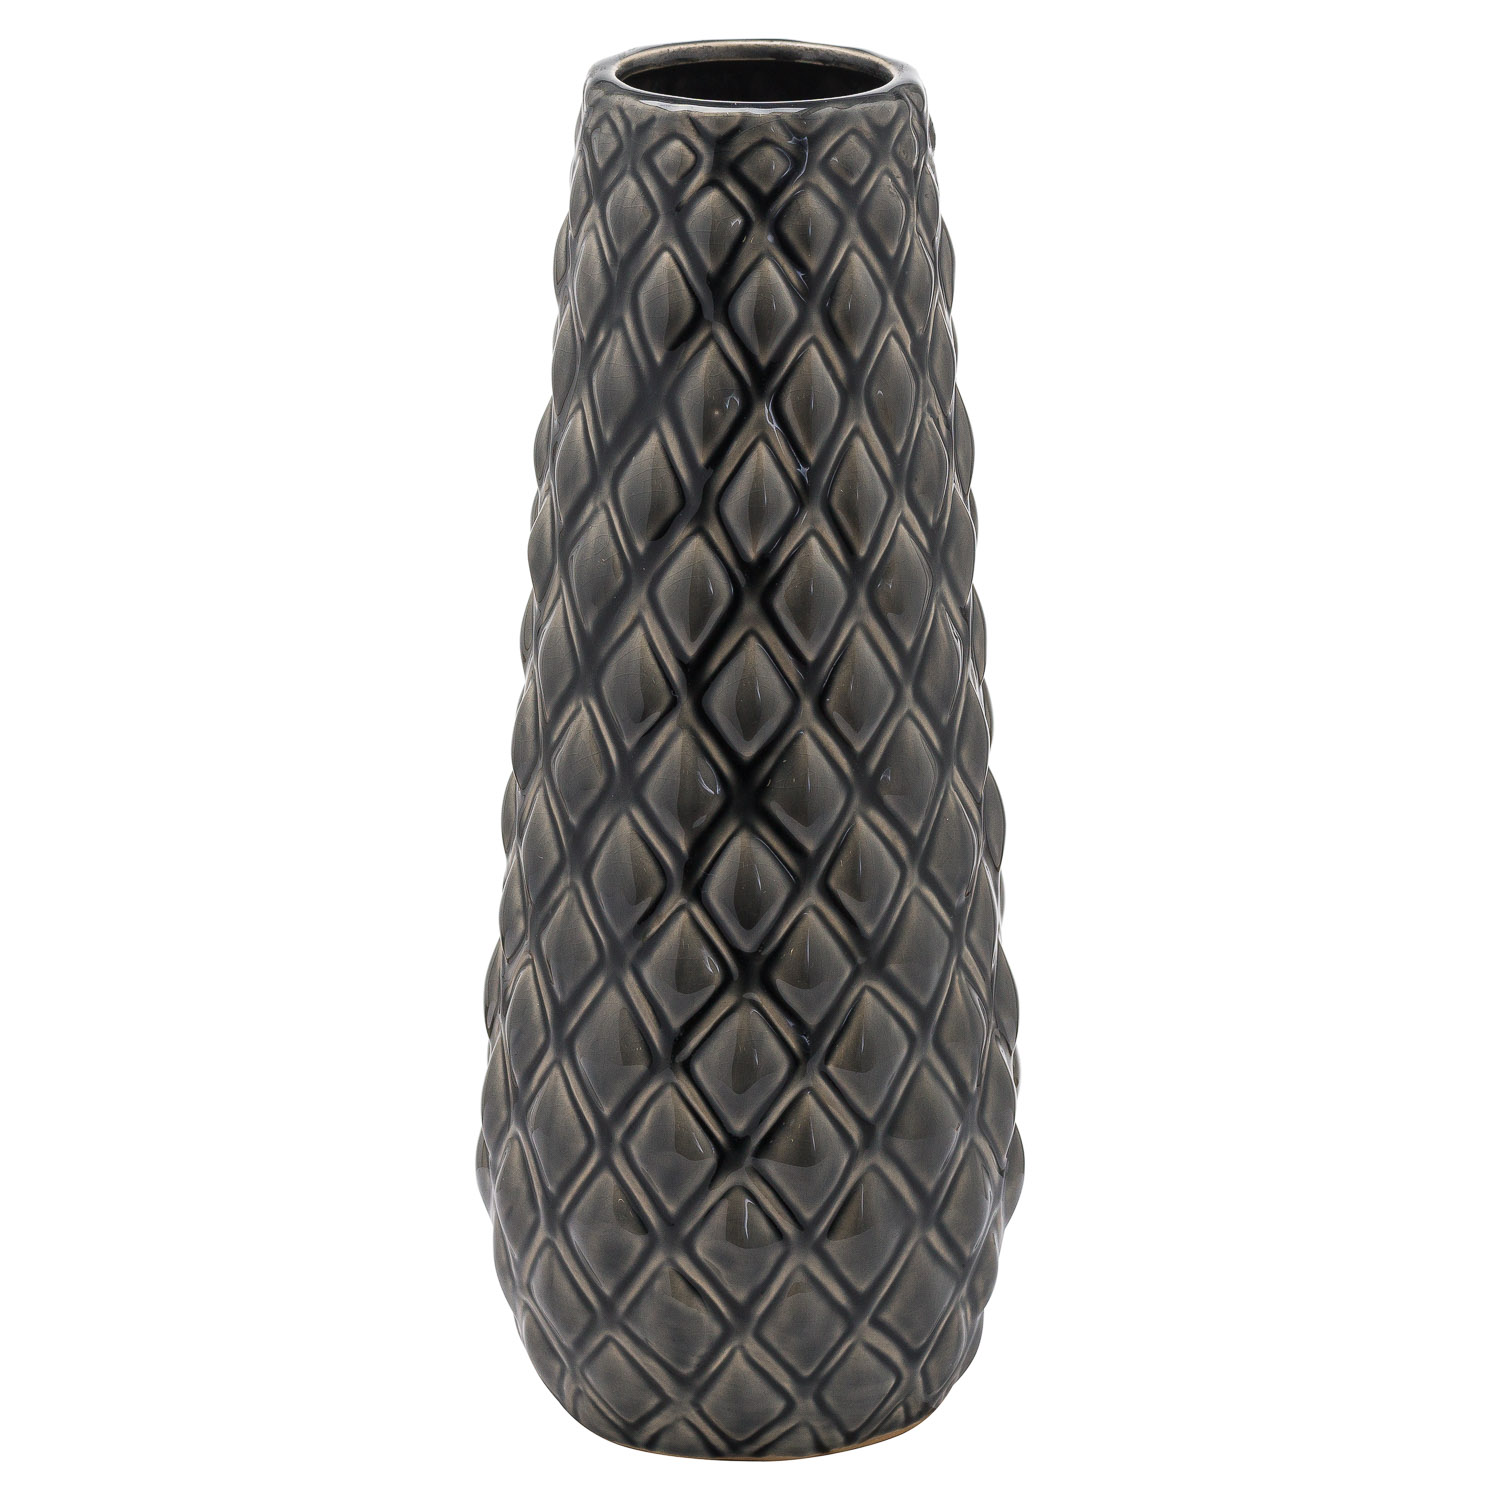 Seville Collection Alpine Vase - Image 1